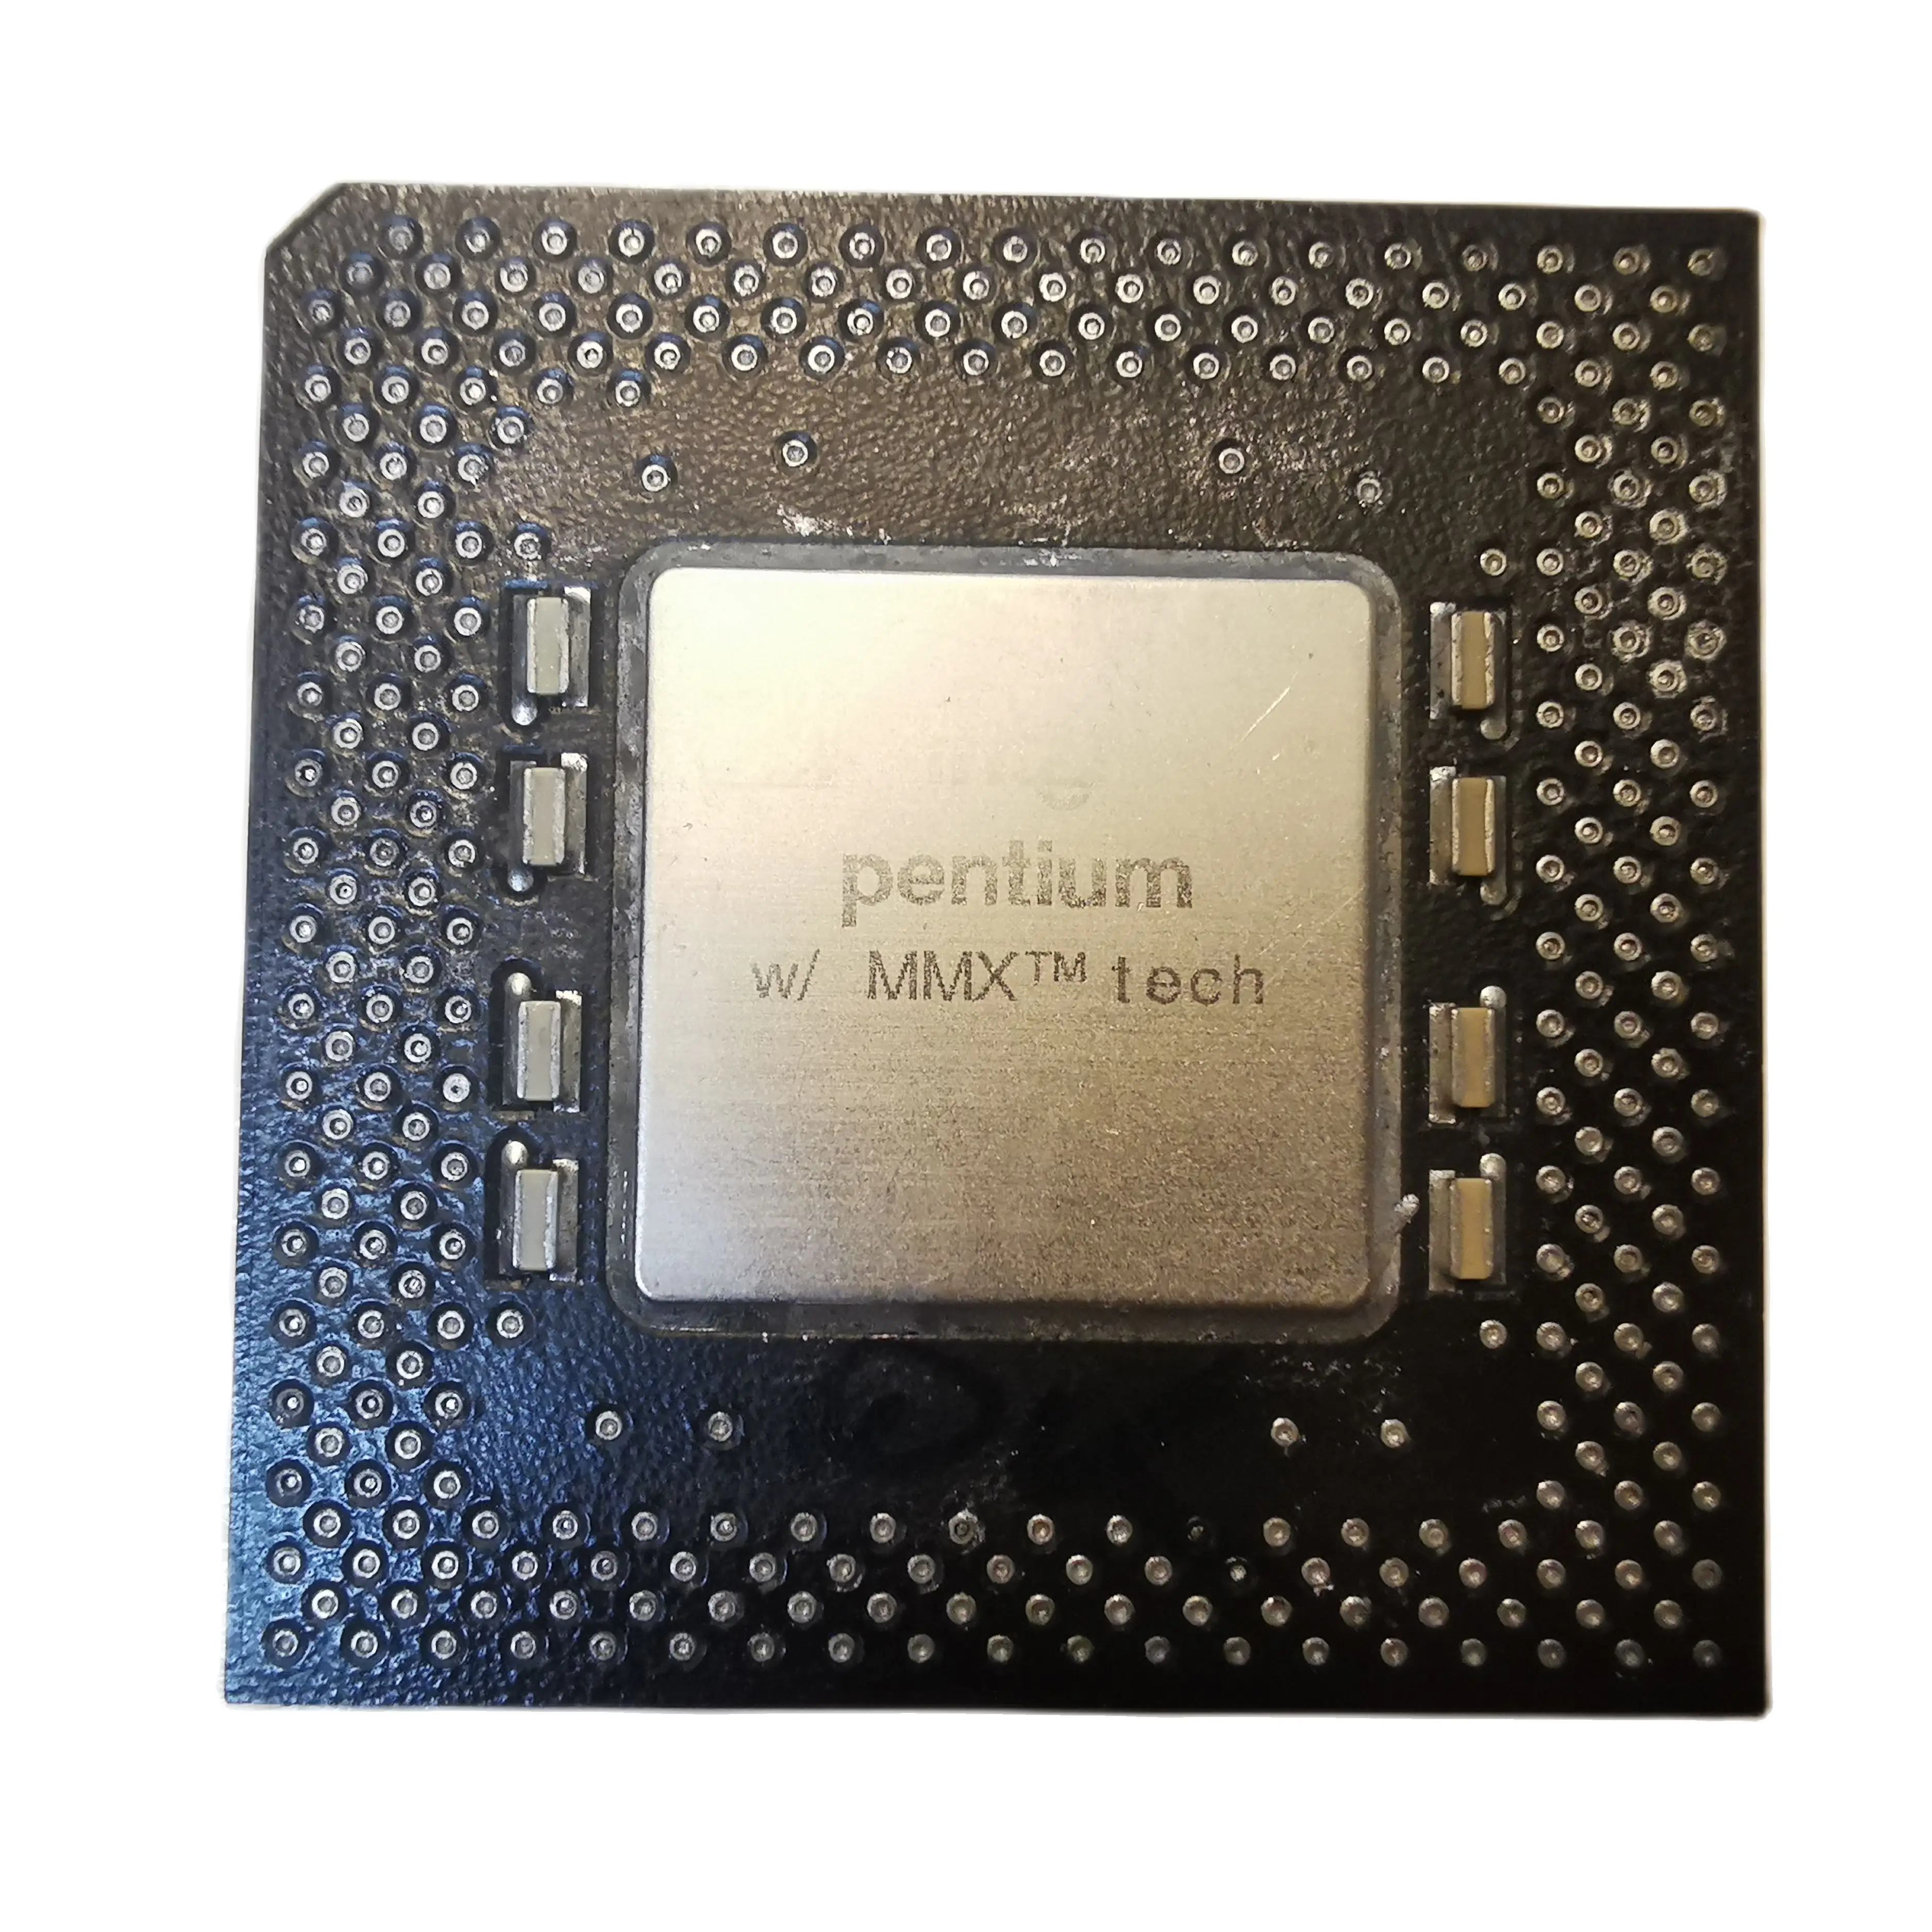 Pentium какой сокет. Pentium 166 MMX. Pentium 166 MMX 1998. Pentium 166 MMX Diablo. Pentium 166 или 166 MMX на который радиатор приклеен.